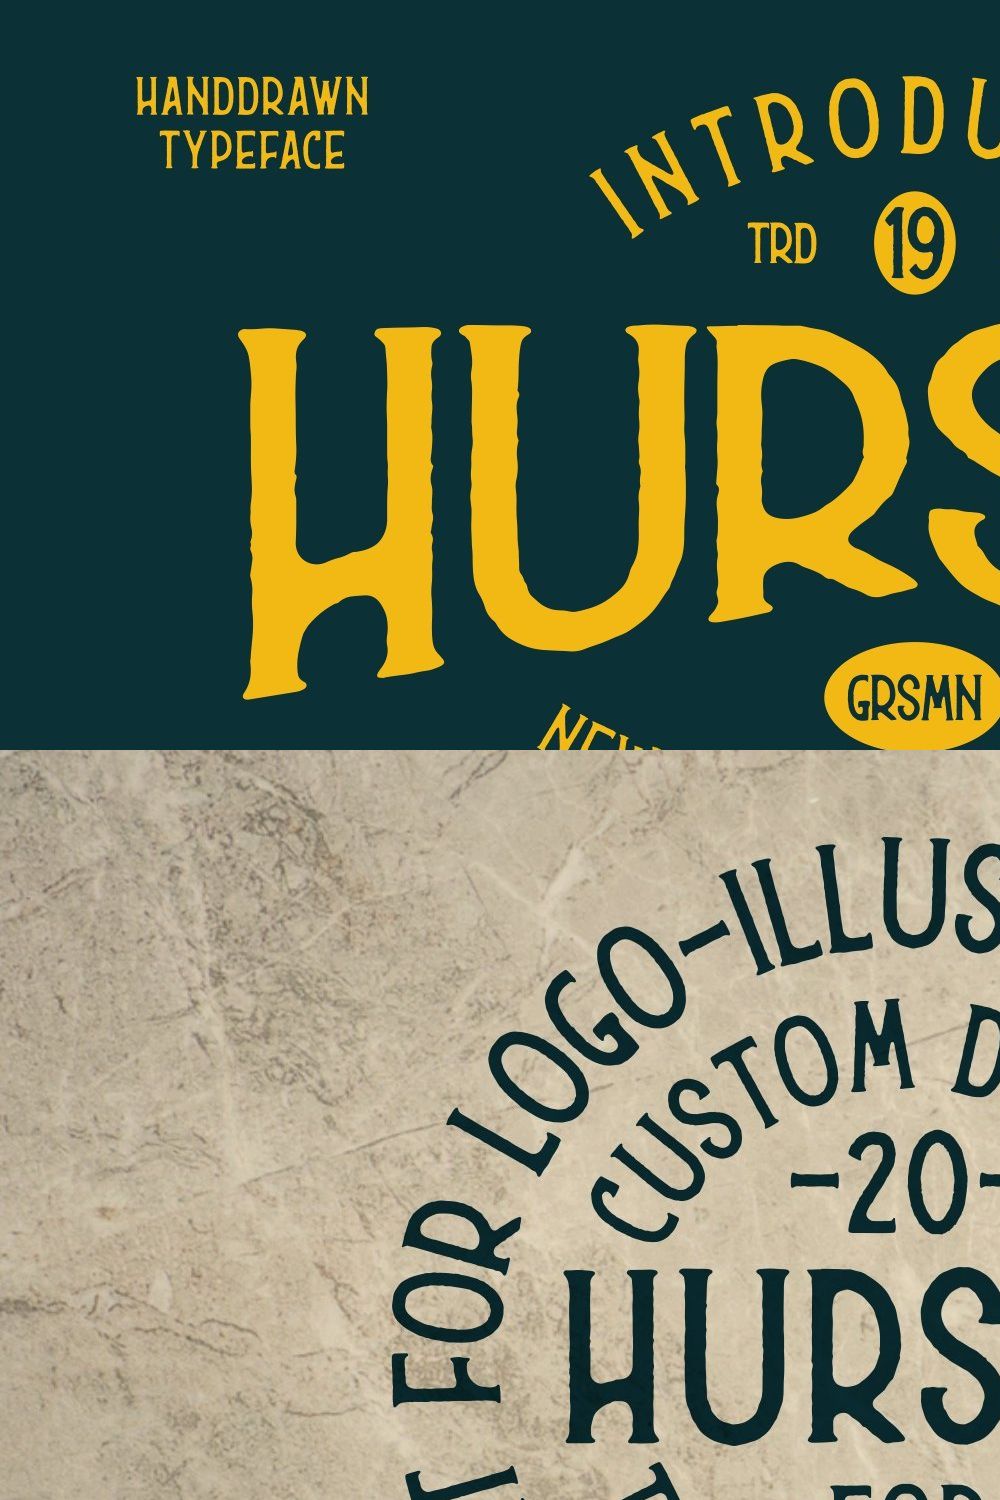 Hurson Rough - Serif pinterest preview image.